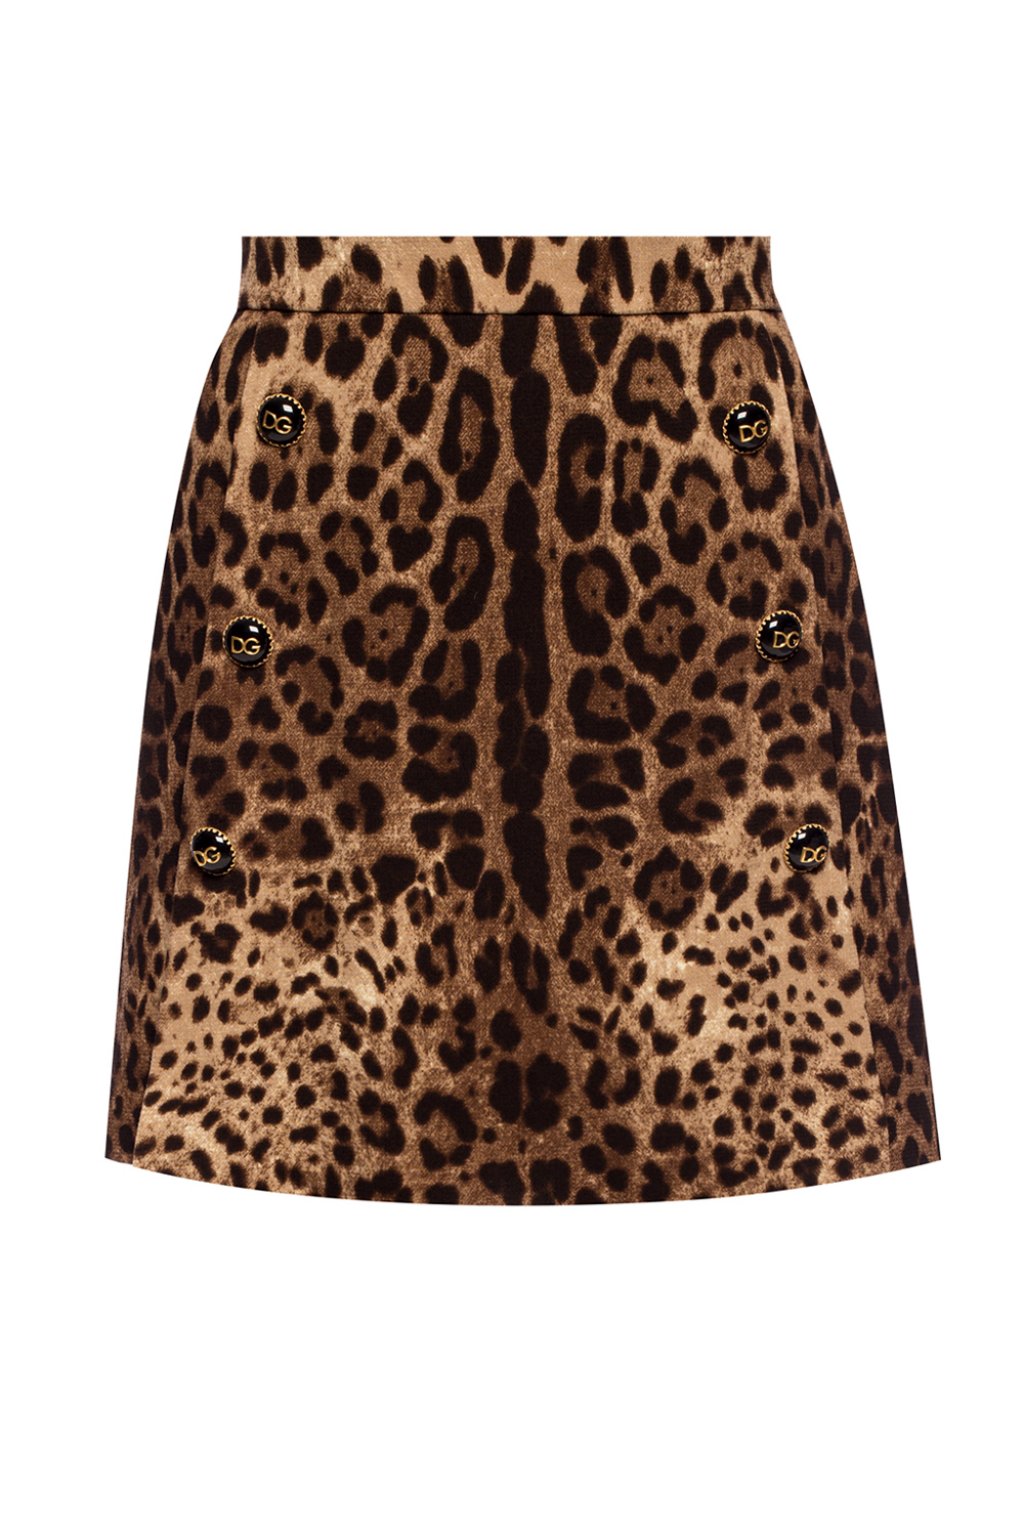 dolce and gabbana leopard skirt